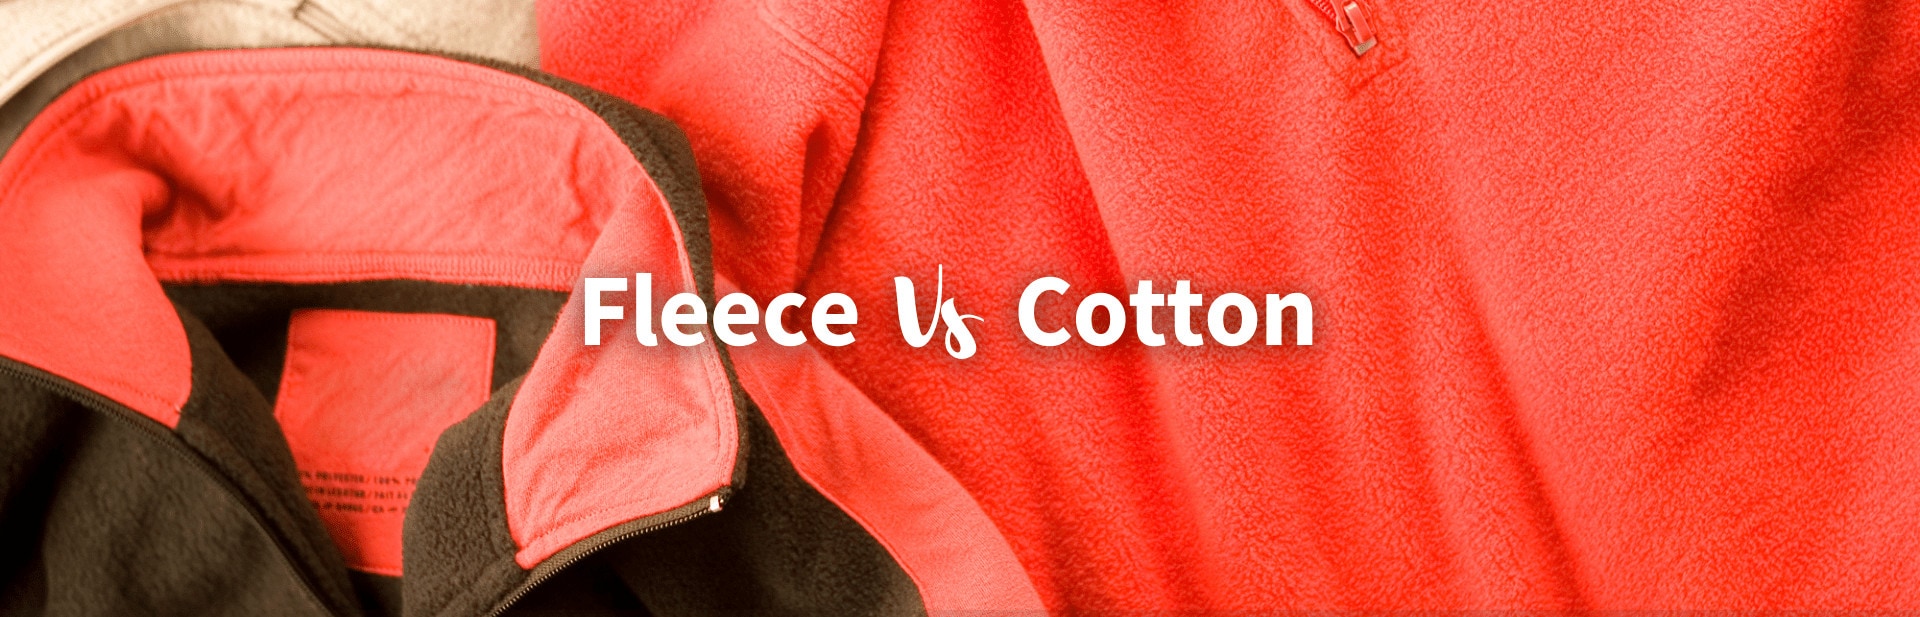 Fleece vs. Cotton: Which One Is Best?